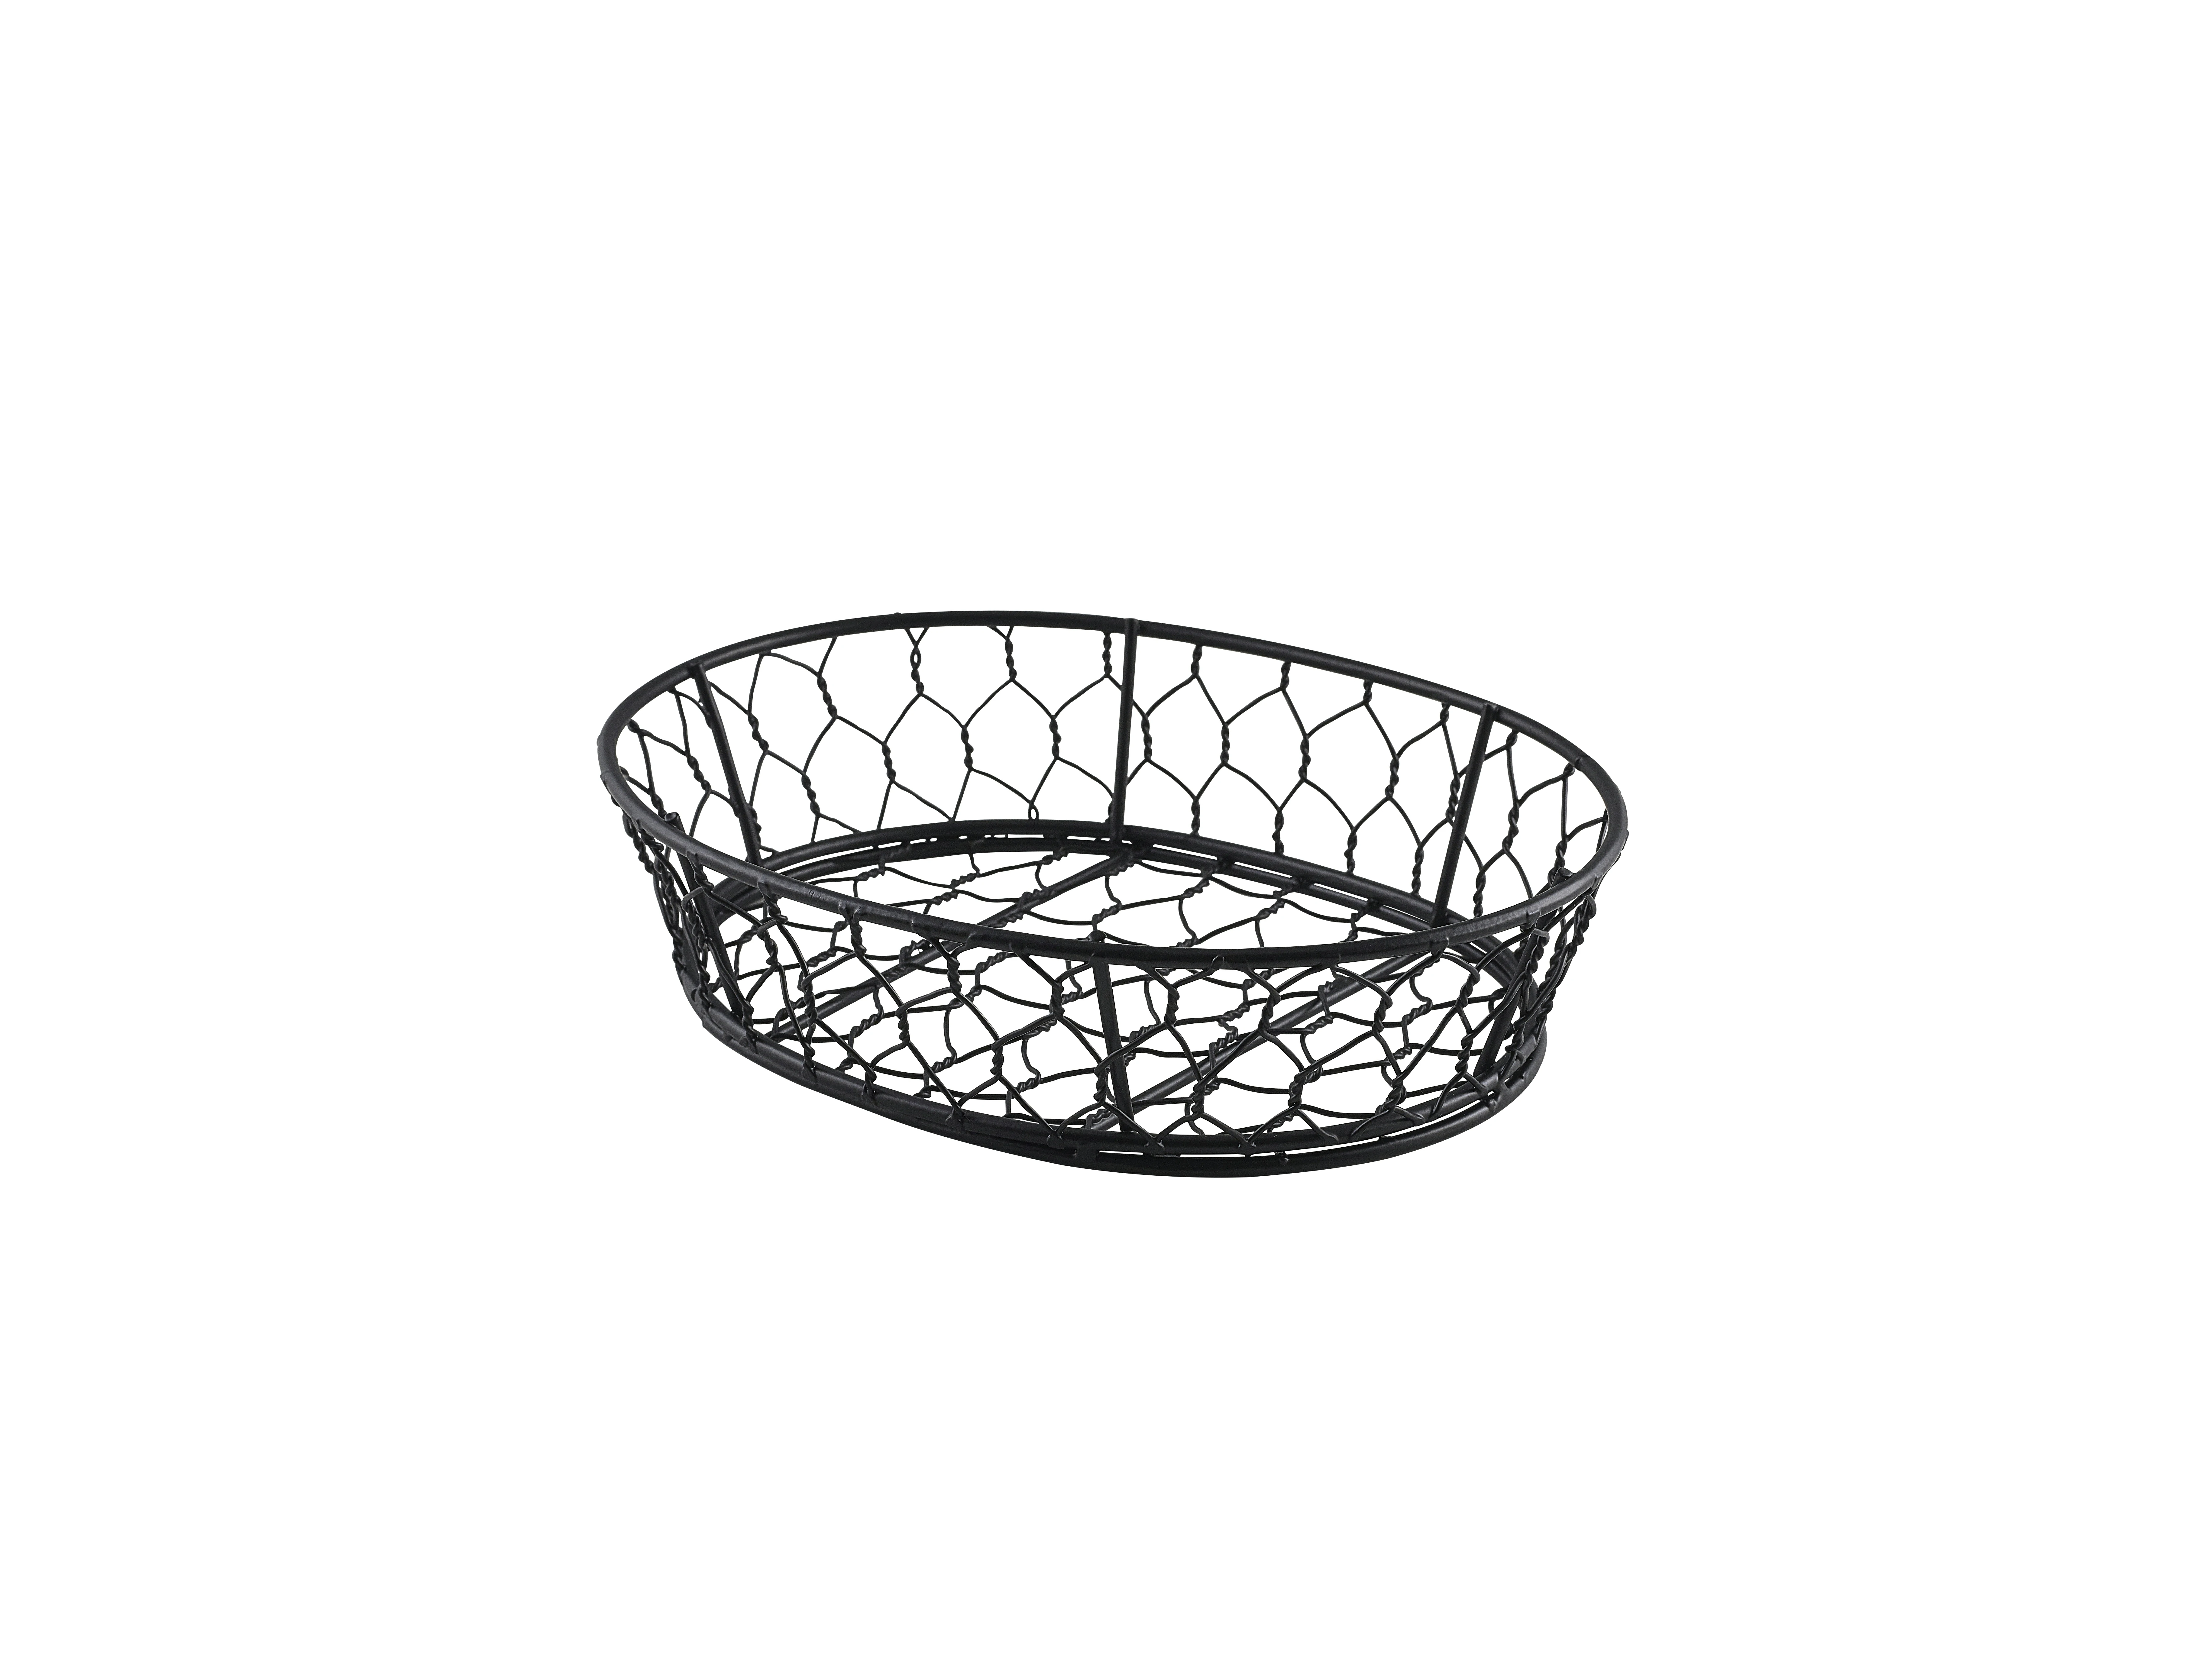 Genware Oval Black Wire Basket 24 x 18 x 6cm